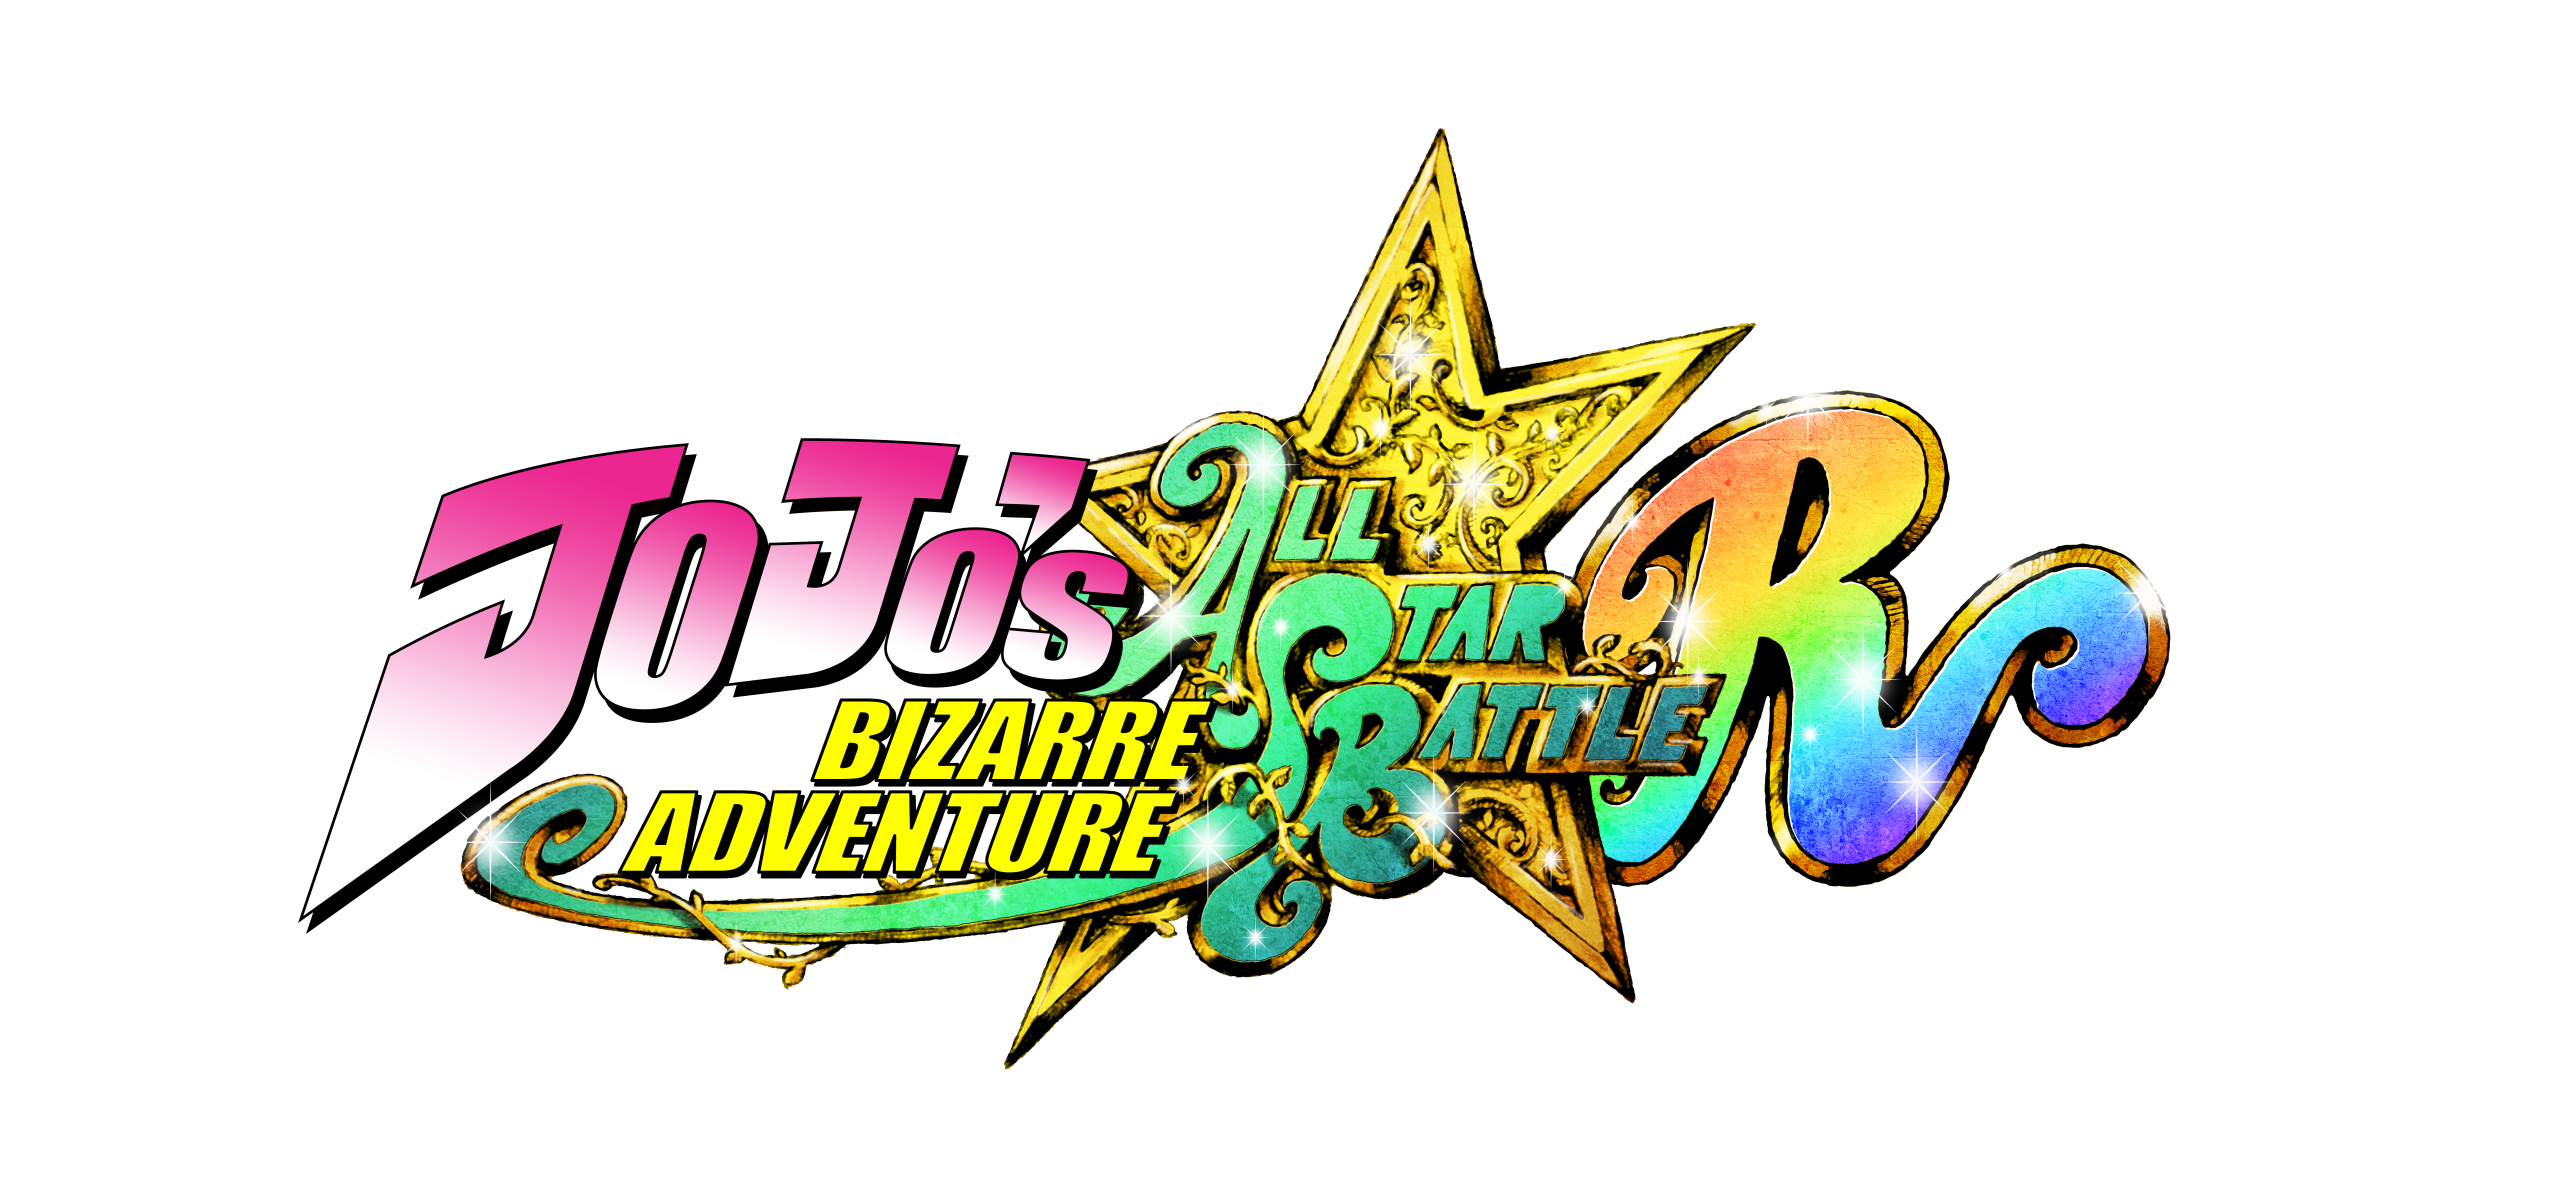 JoJo's Bizarre Adventure: All Star Battle R coming to Switch this autumn -  My Nintendo News